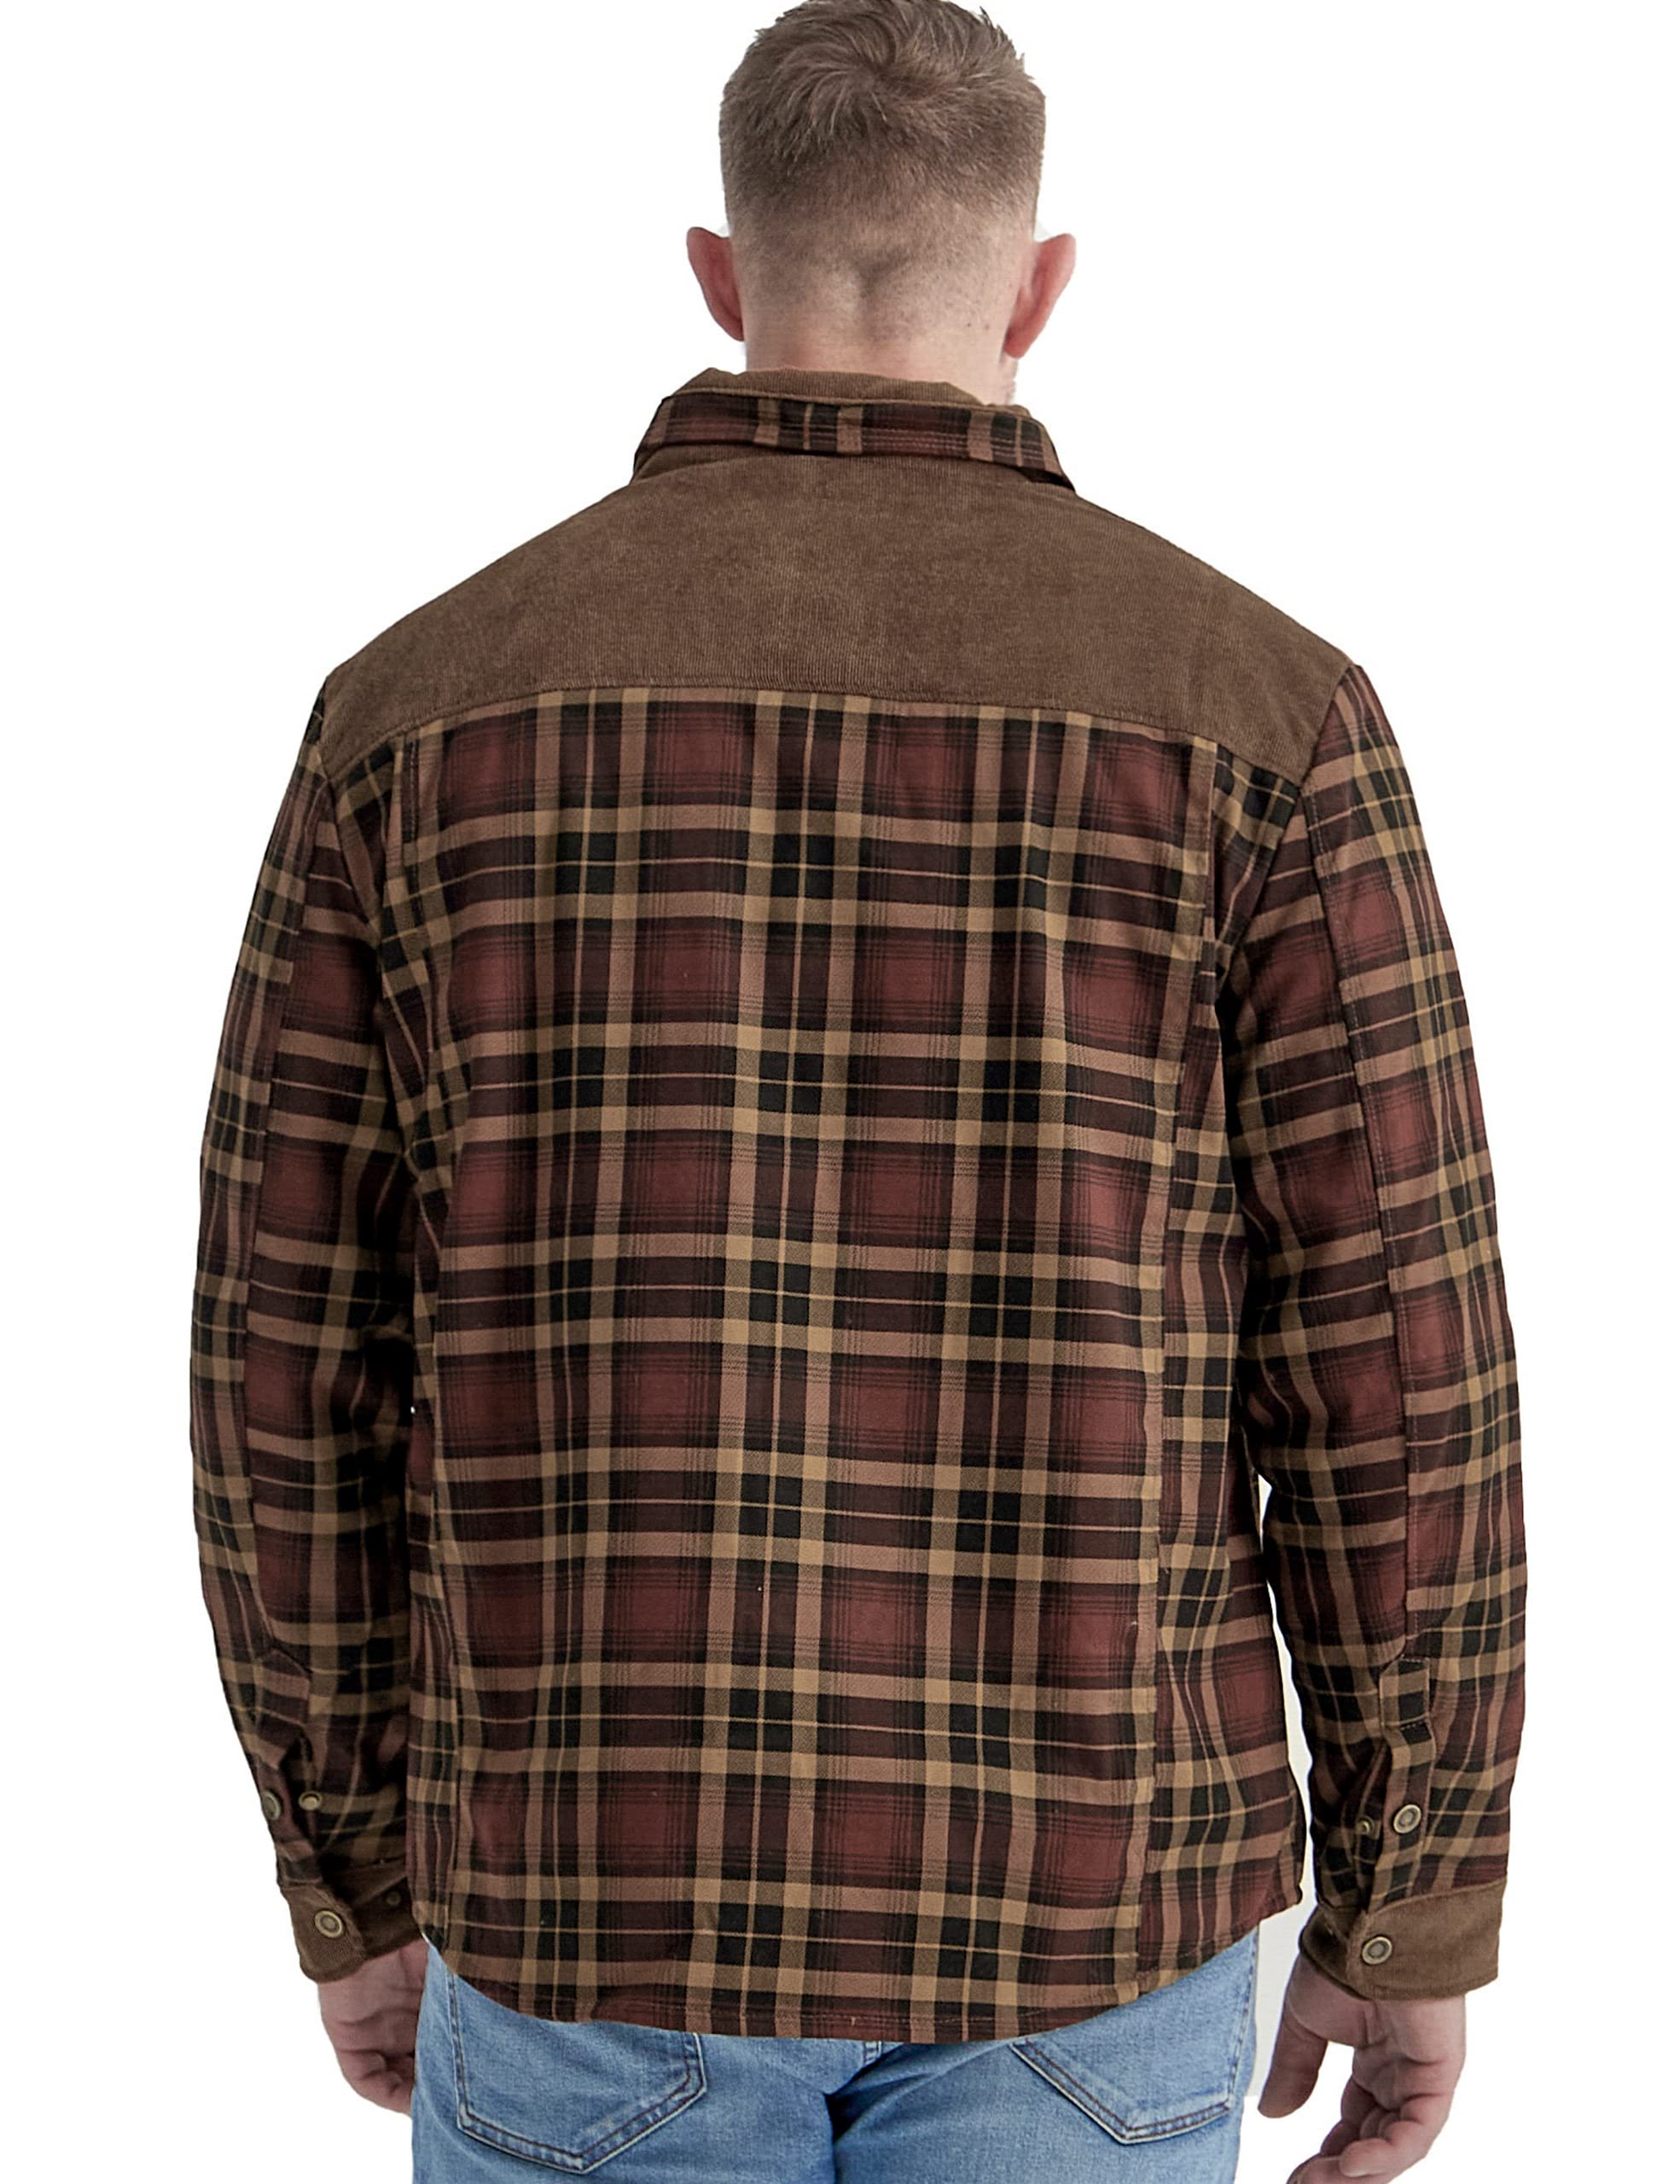 Flygo Men's Outdoor Casual Buck Camp Fleece Sherpa Lined Flannel Plaid Shirt Jacket